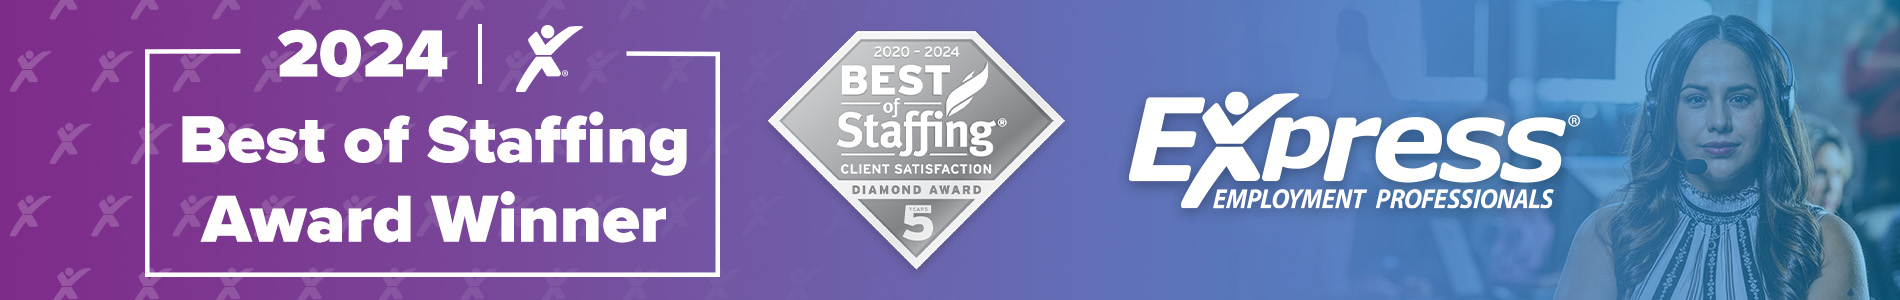 2024 Best of Staffing Award Winner - Express Employment Professionals.